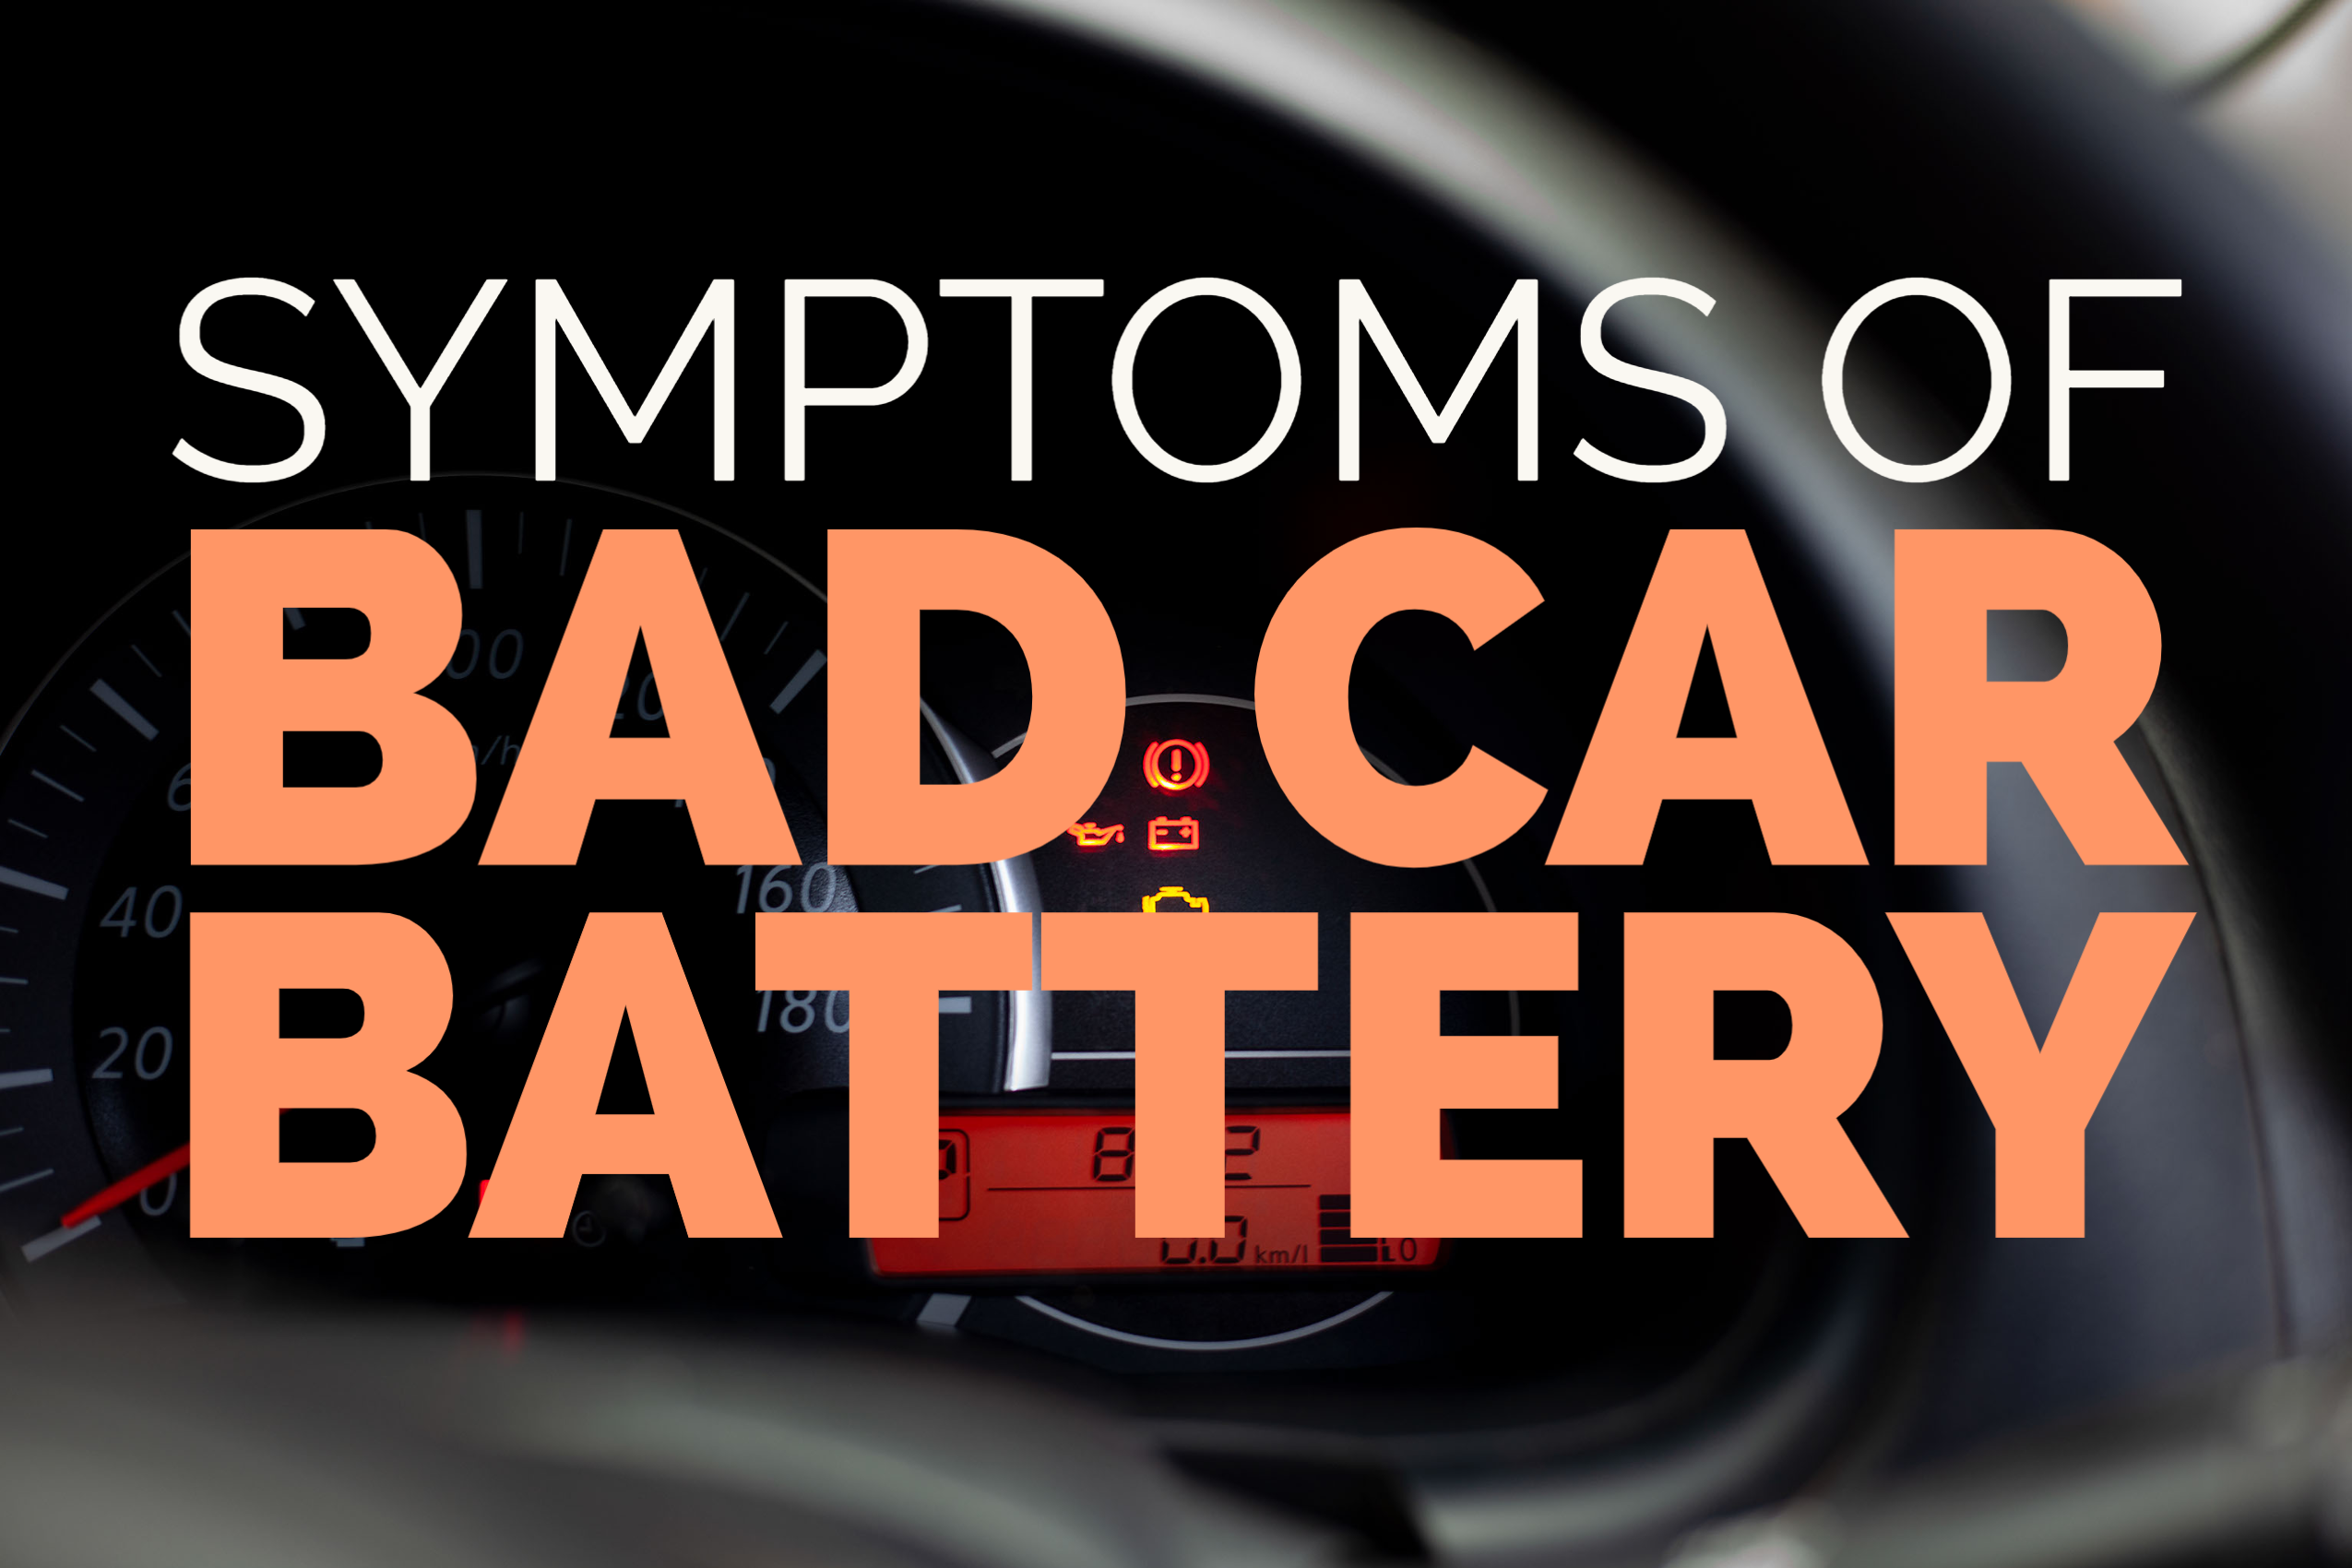 Symptoms of a Bad Car Battery